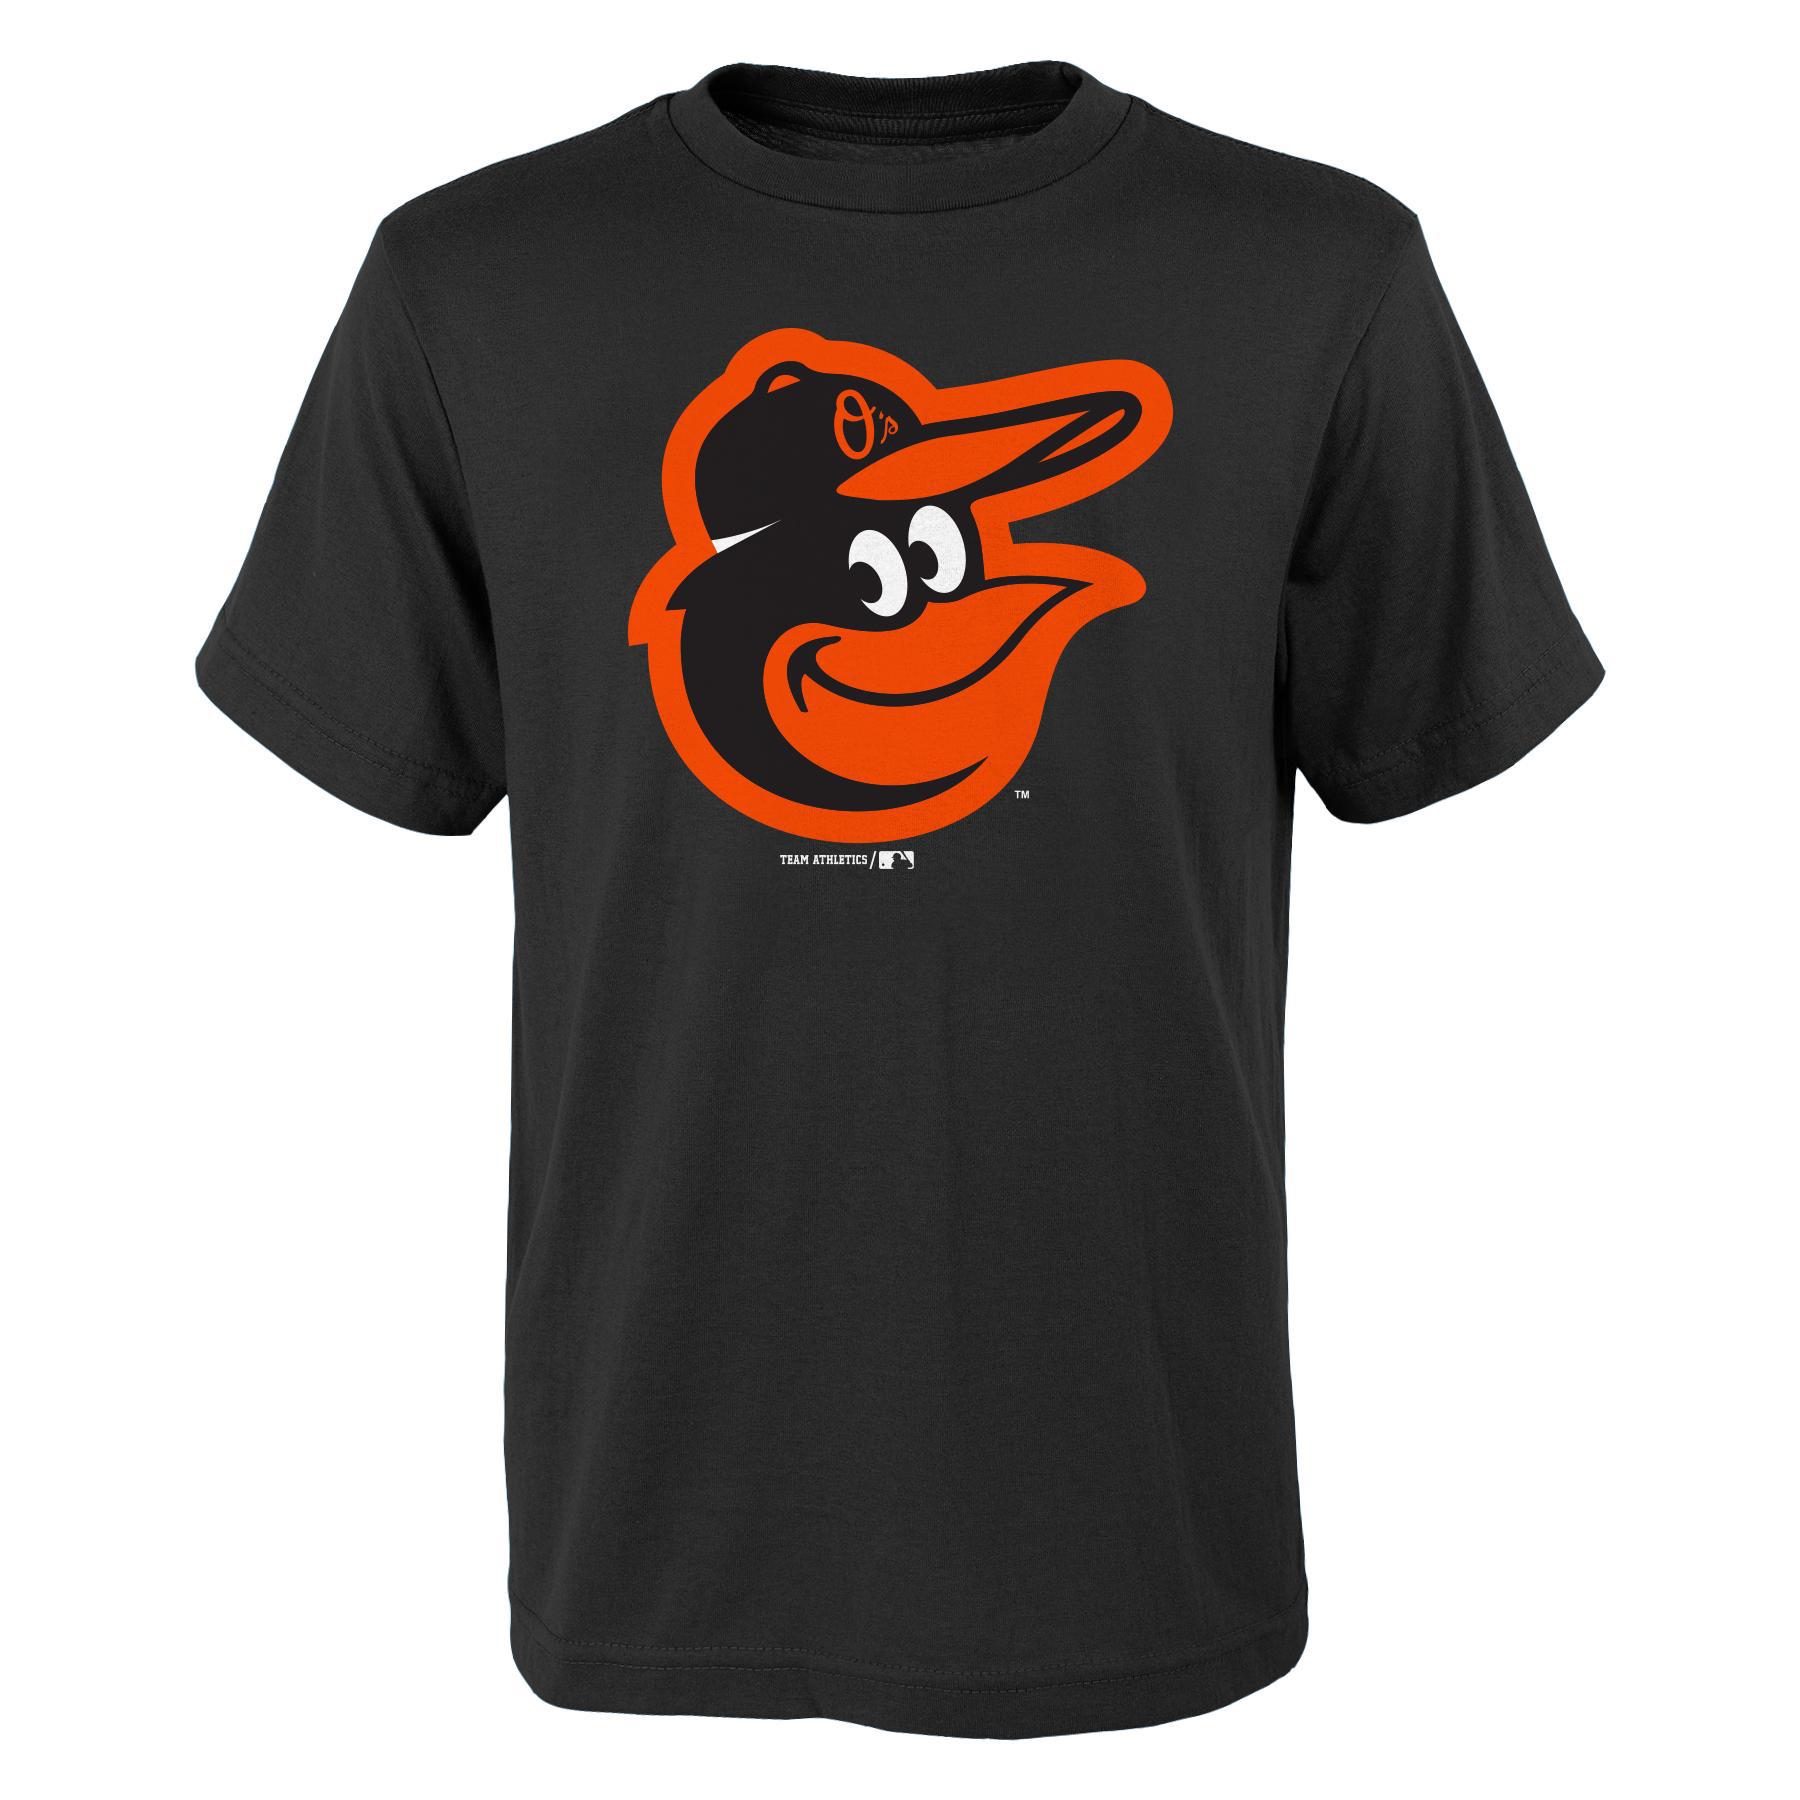 MLB Boy's Graphic T-Shirt - Baltimore Orioles